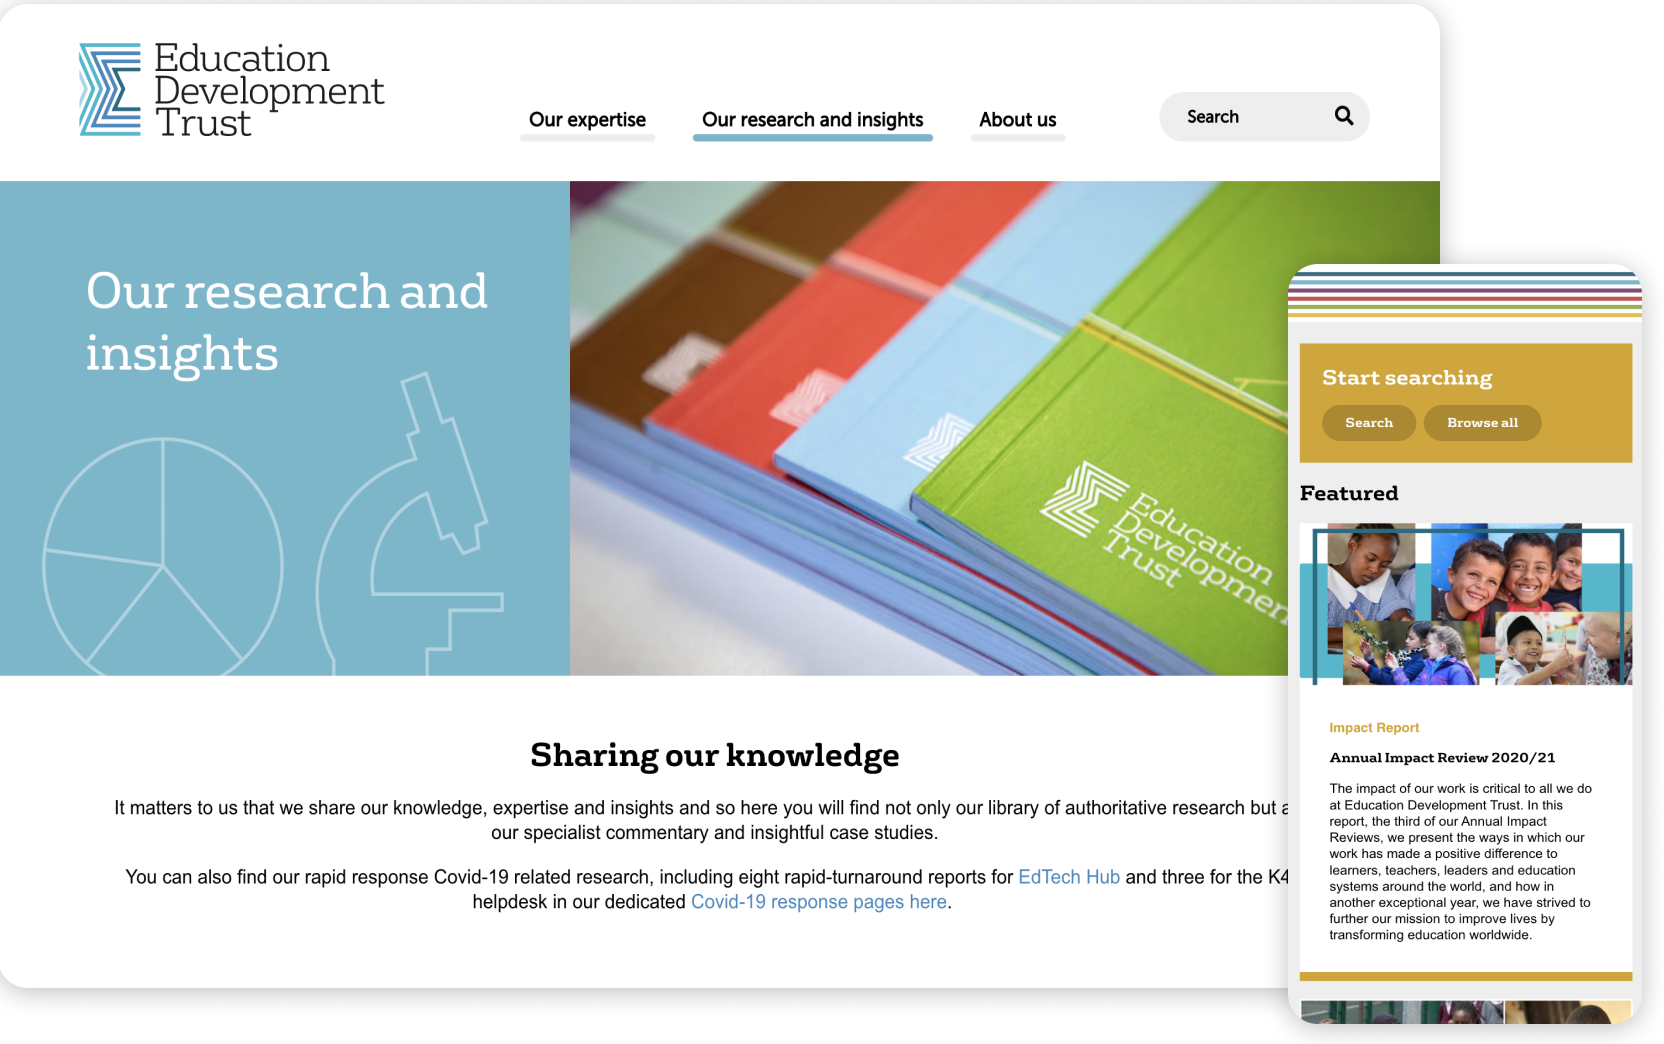 Visual design of the Educational Development Trust website